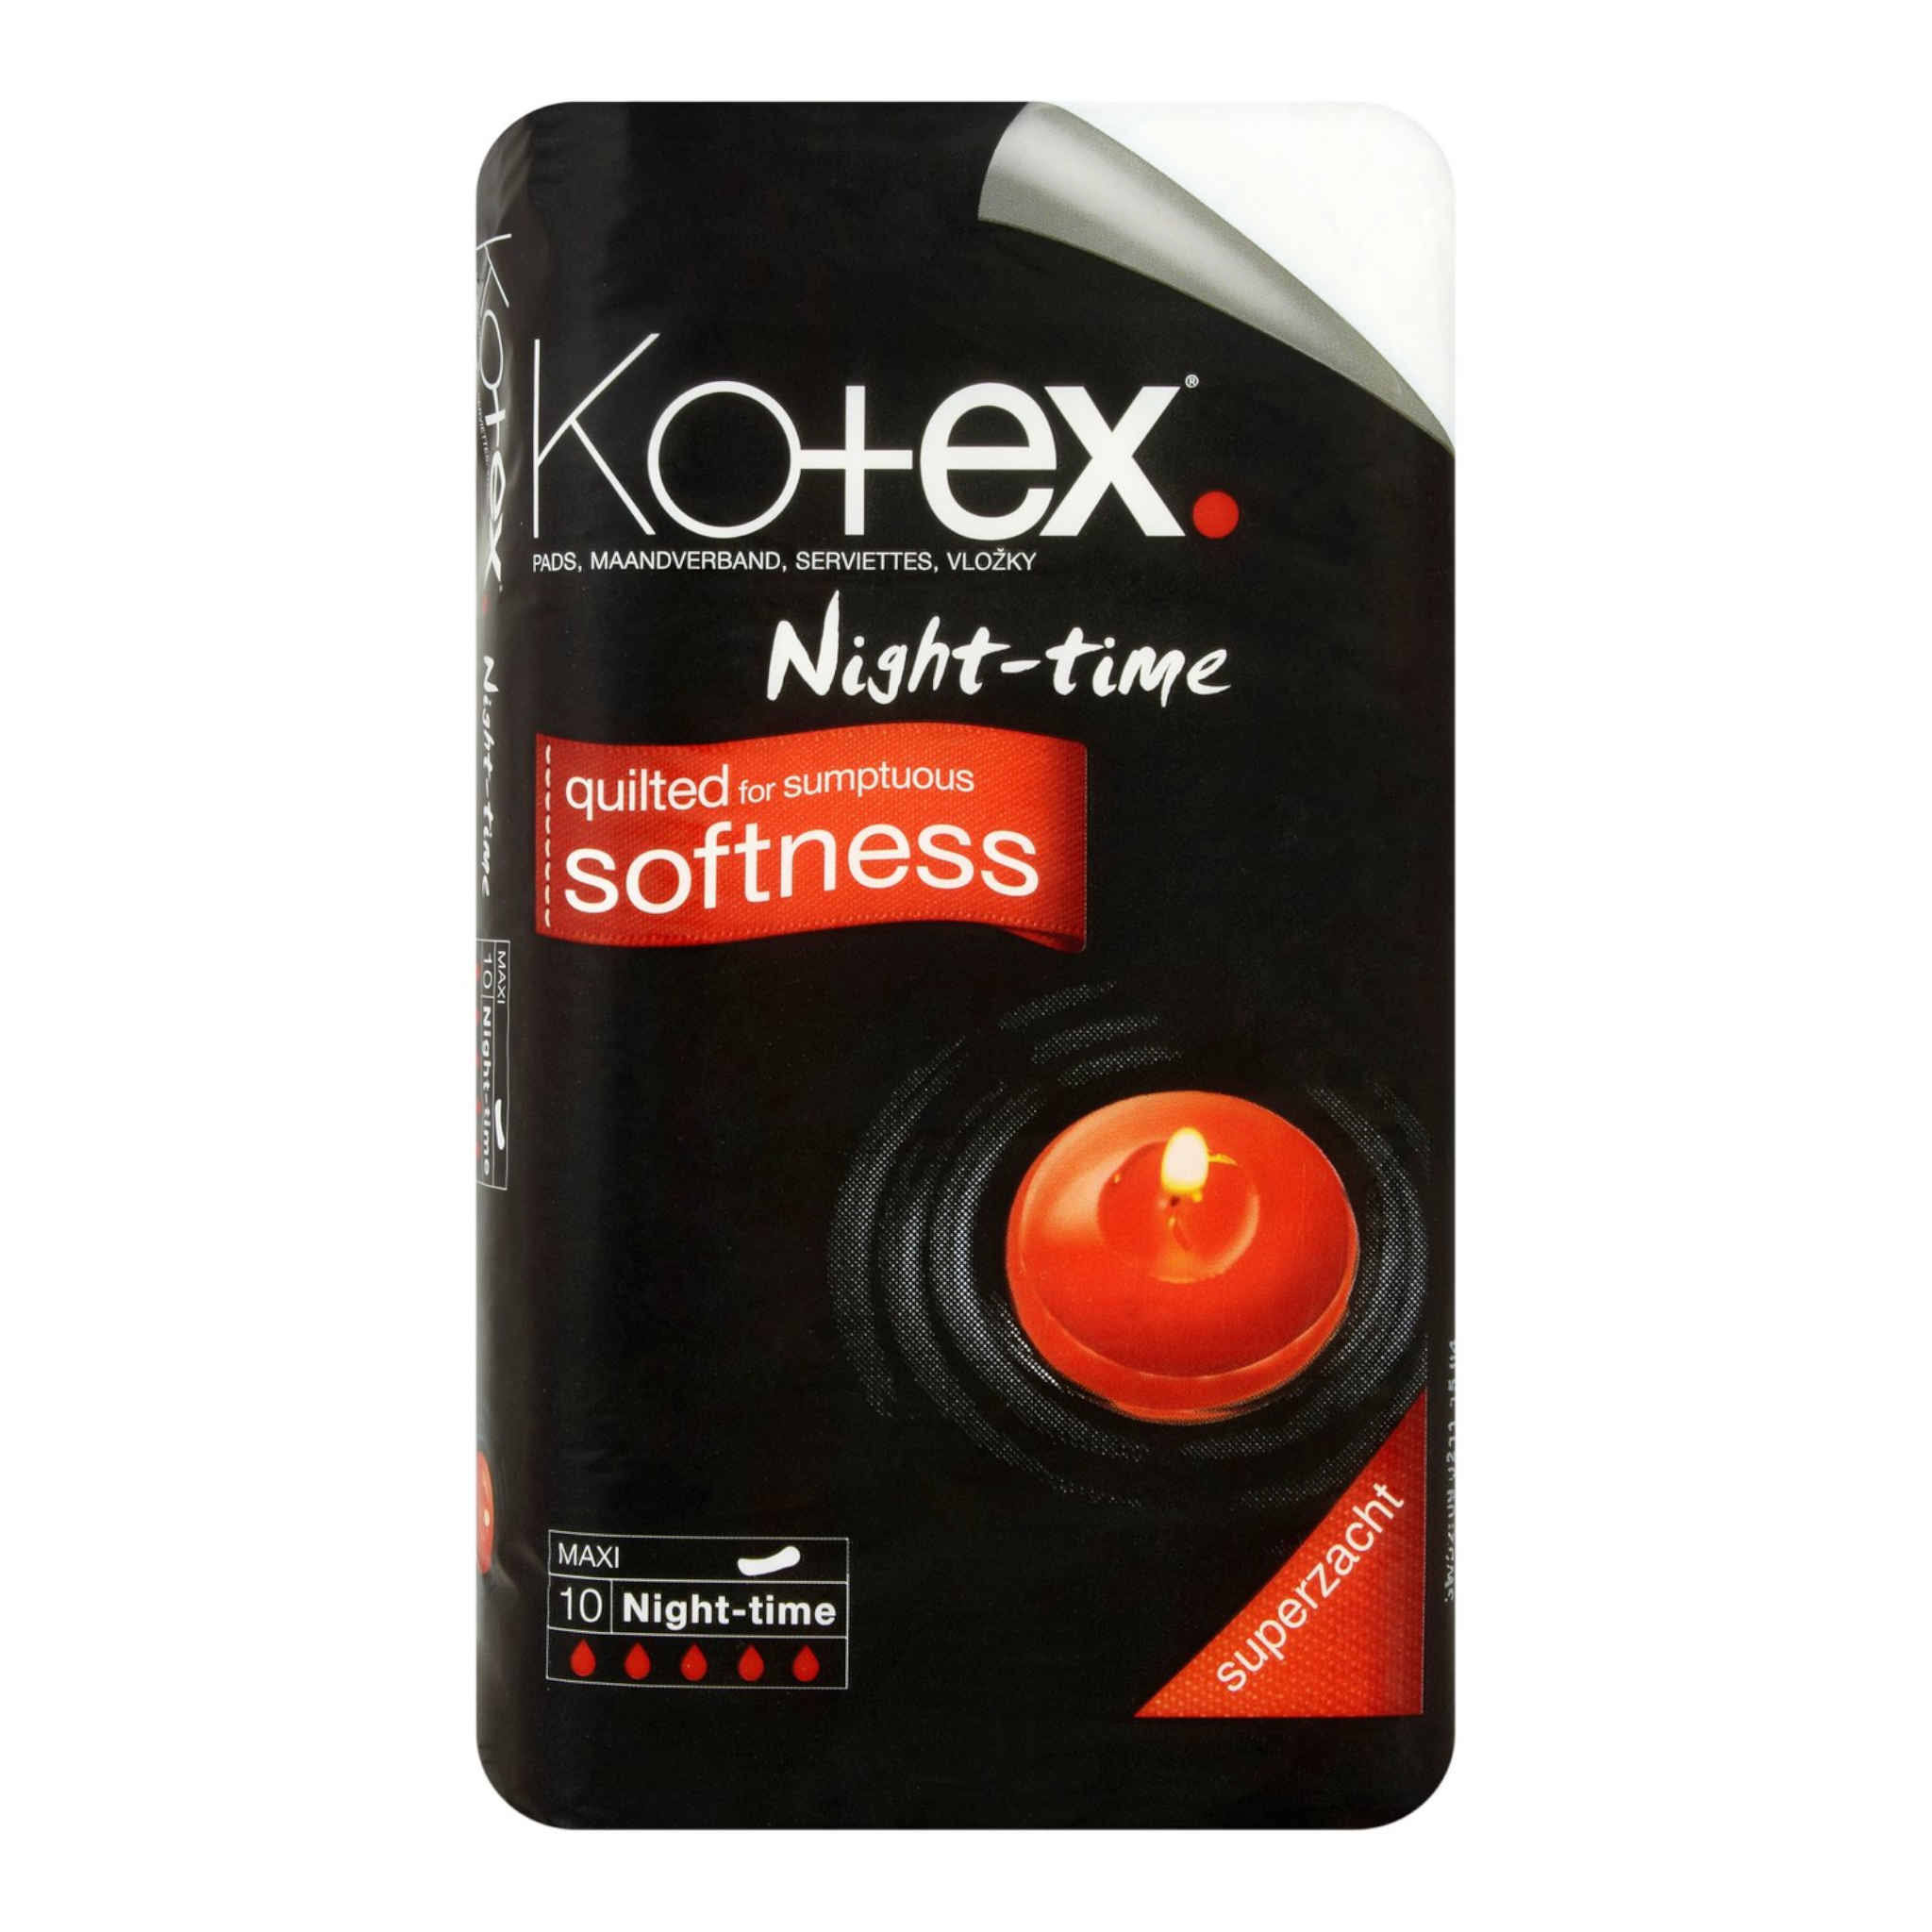 Kotex Maxi Pads - Night Time, 10ct